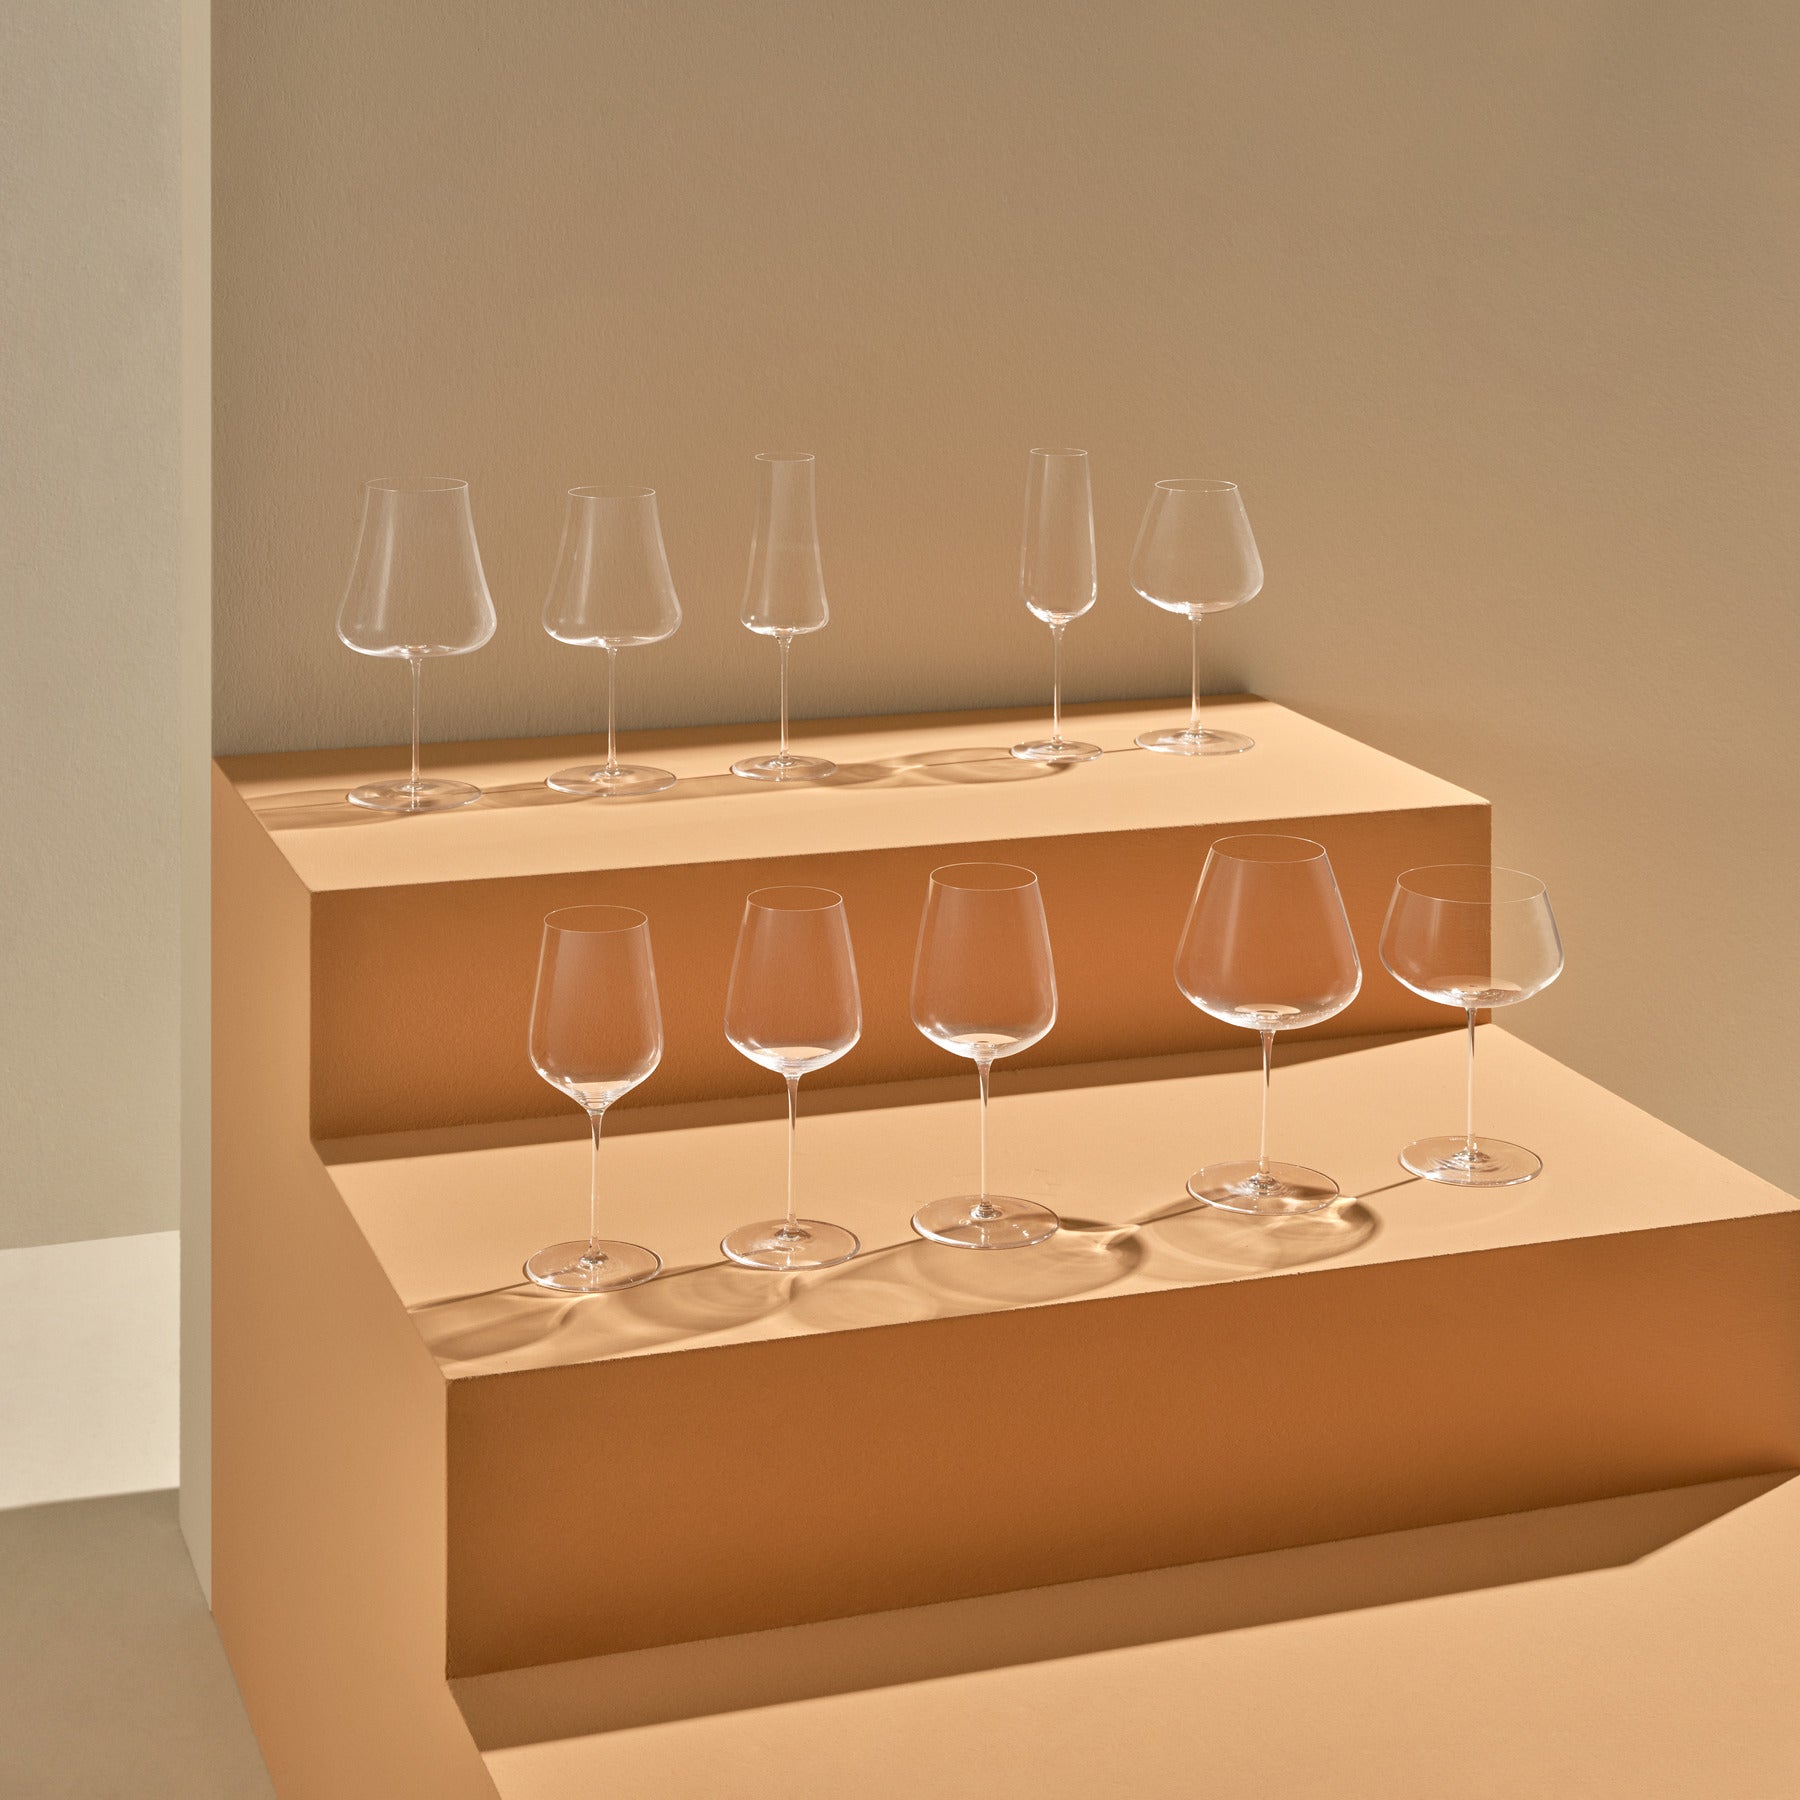 Nude Glass Fantasy White Wine Glasses, Set of 2